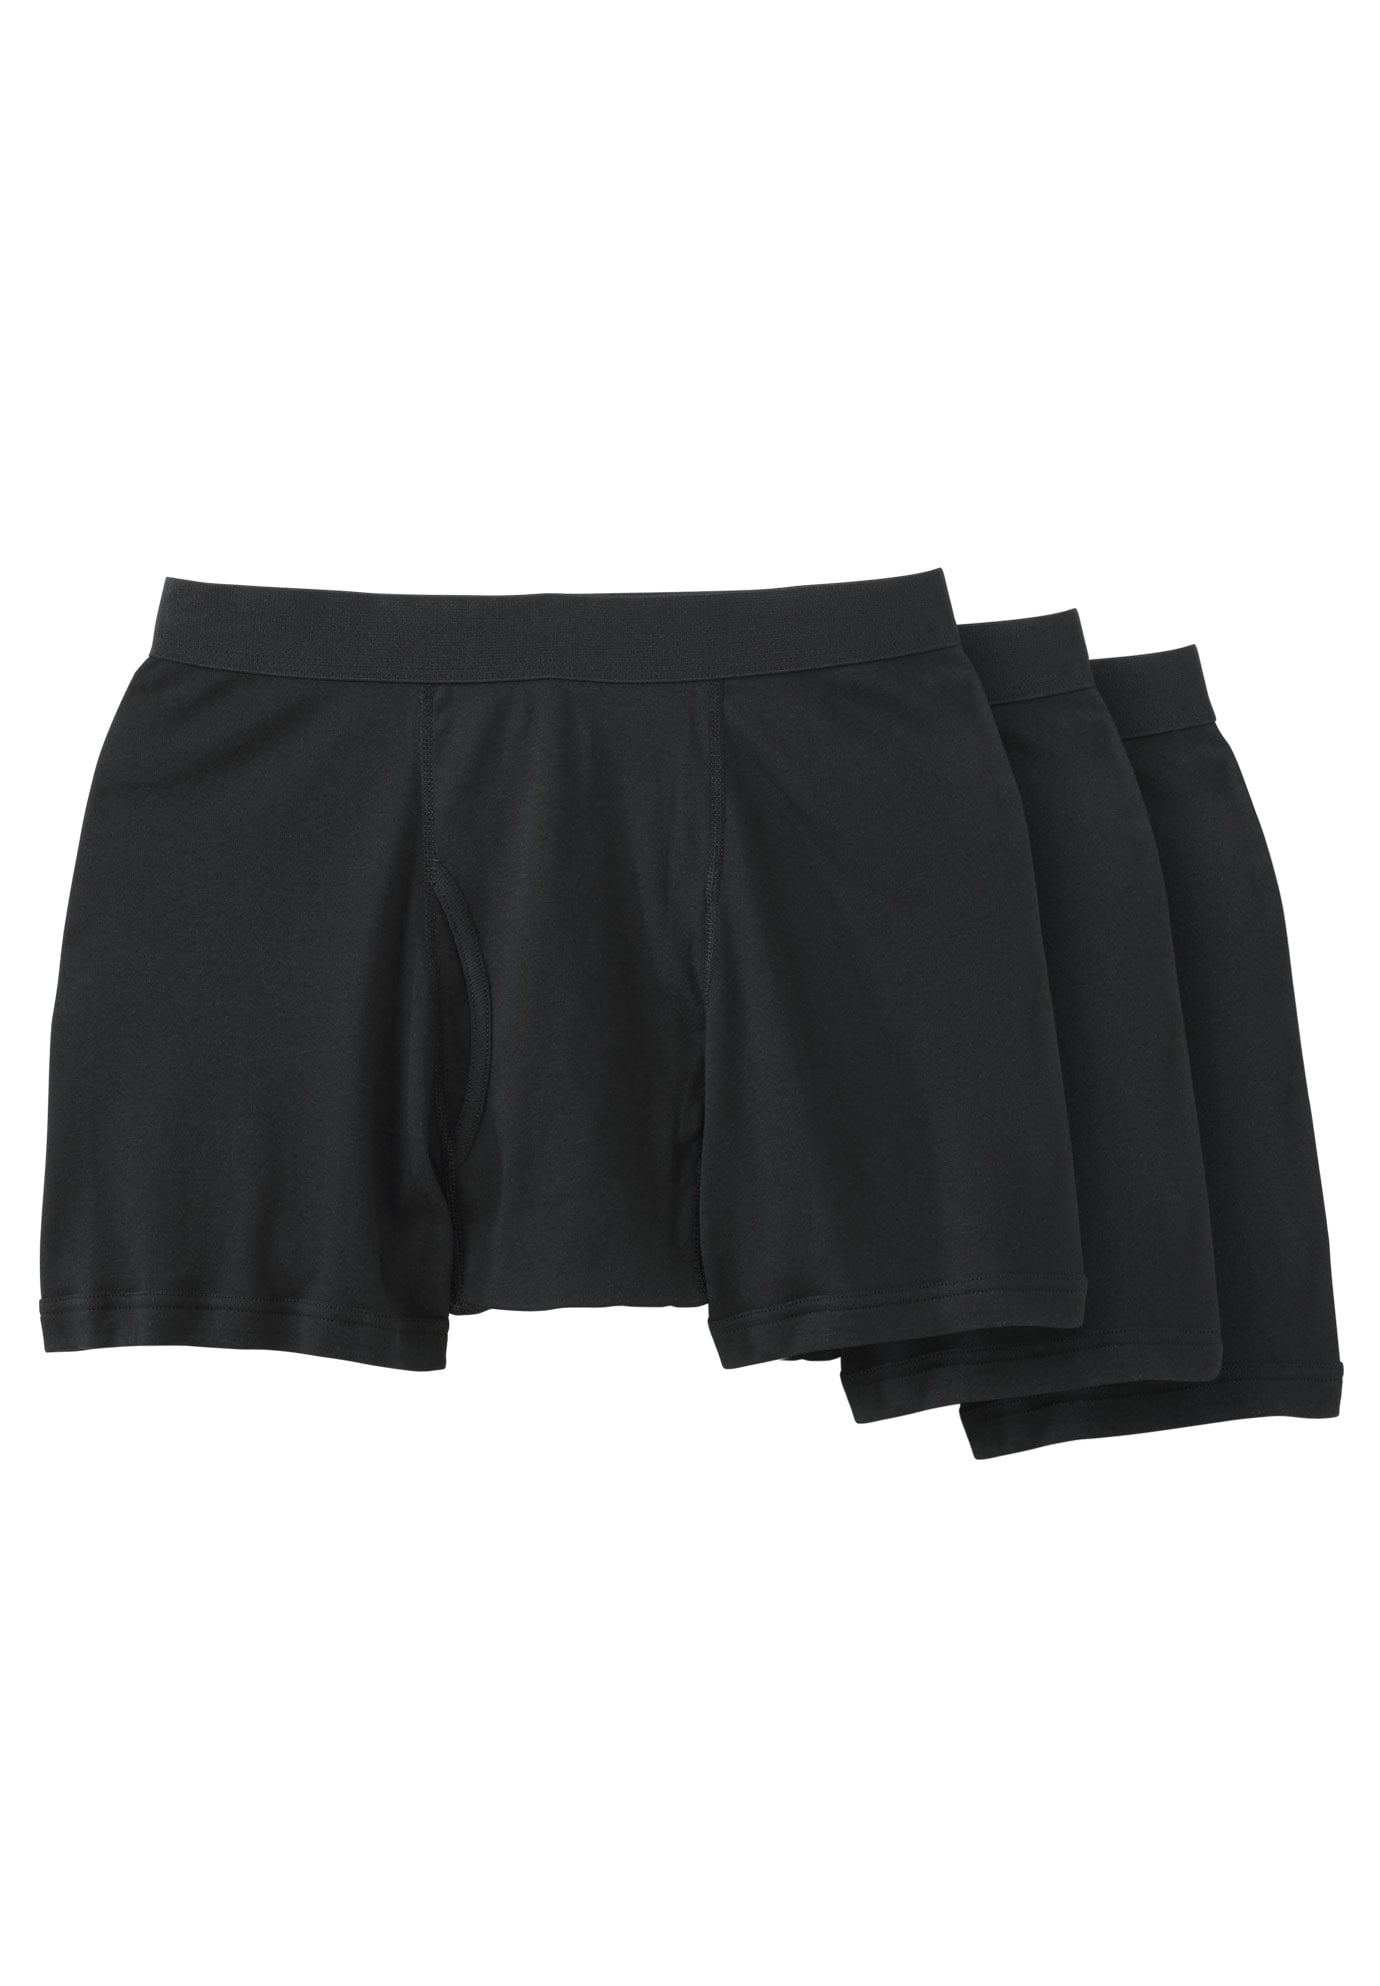 Kingsize Men's Big & Tall Cotton Mid-Length Briefs 3-Pack Underwear 